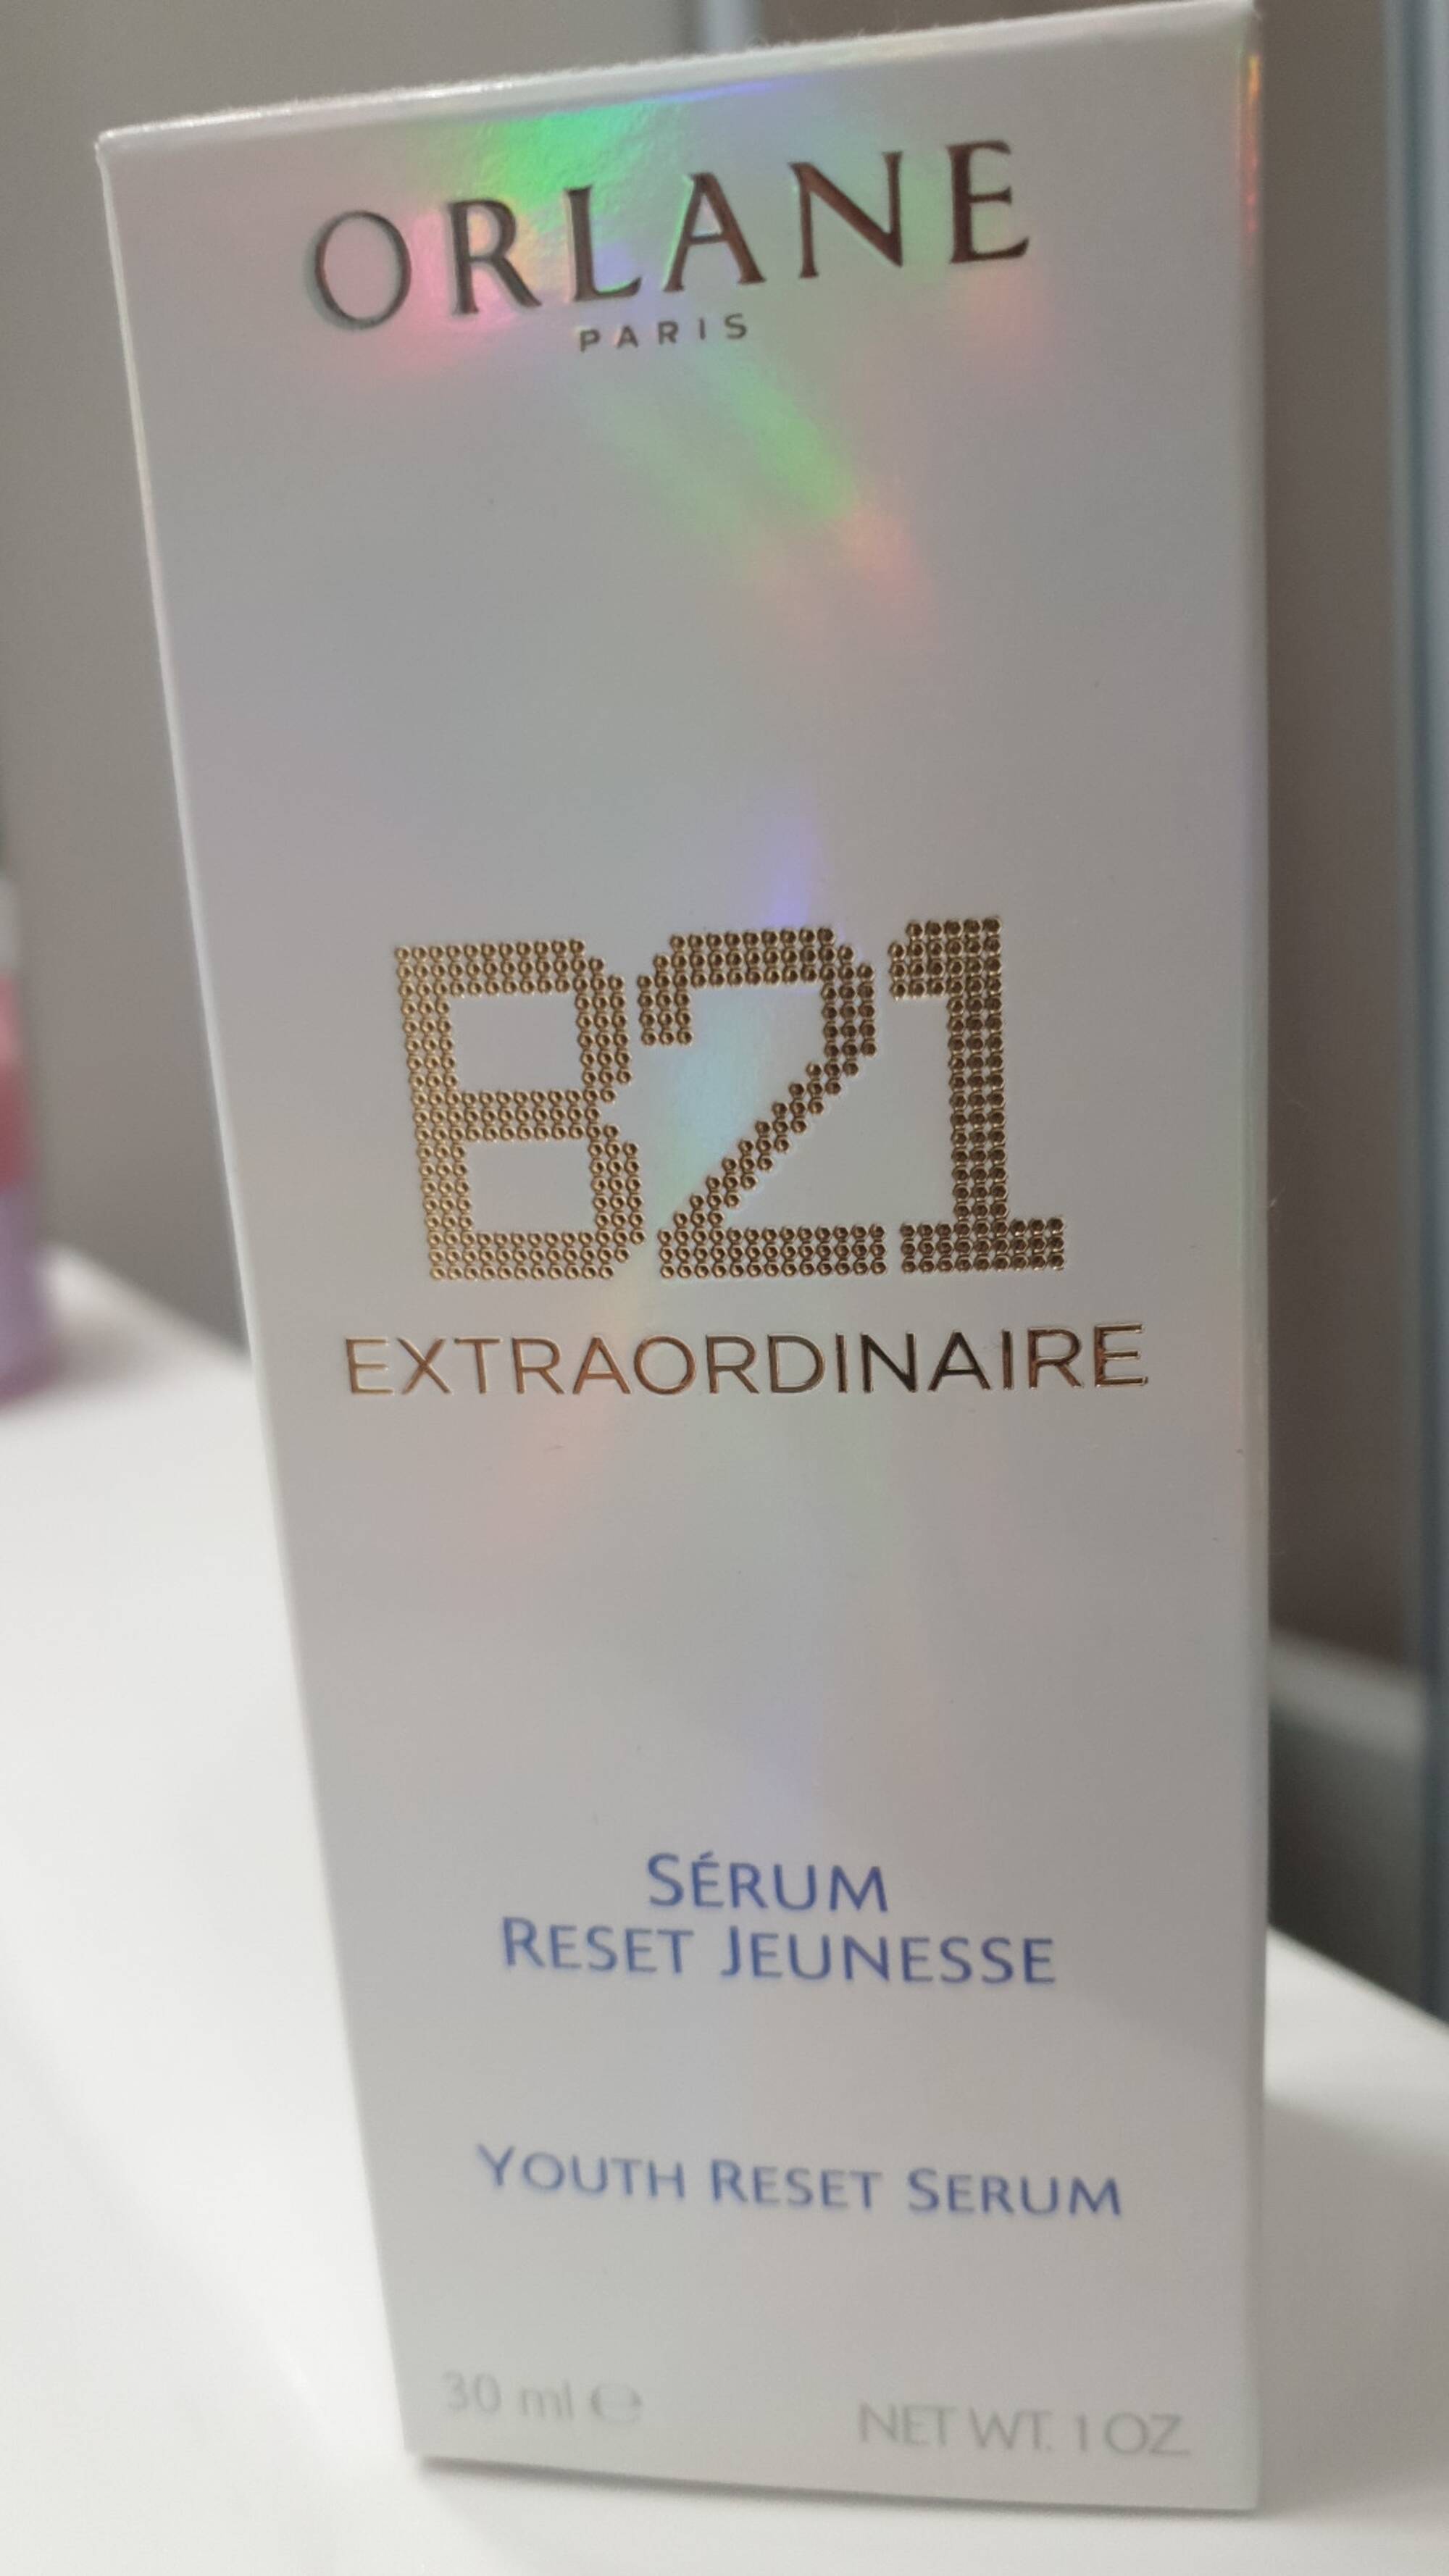 ORLANE PARIS - B21 Extraordinaire - Sérum reset jeunesse